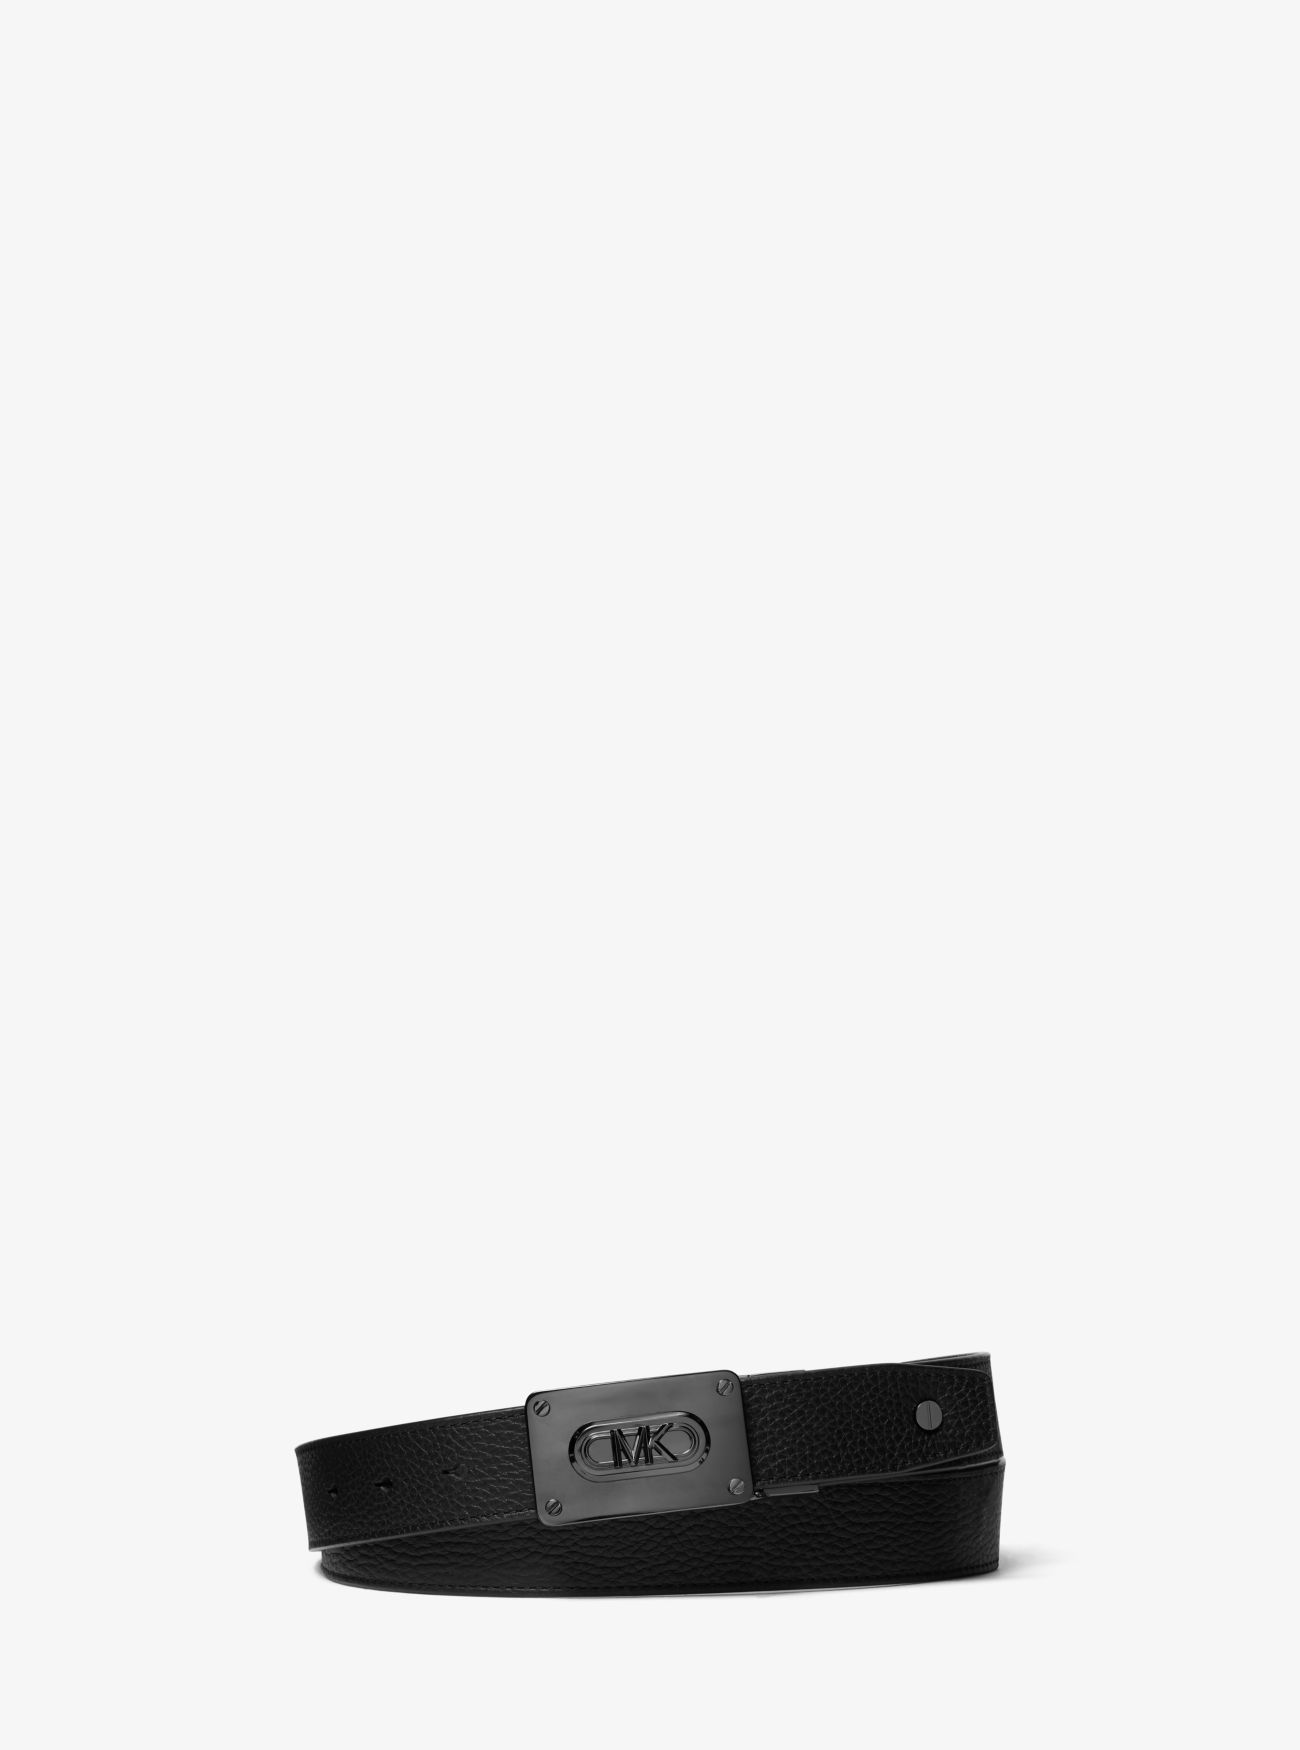 MK Reversible Leather and Logo Belt - Black - Michael Kors